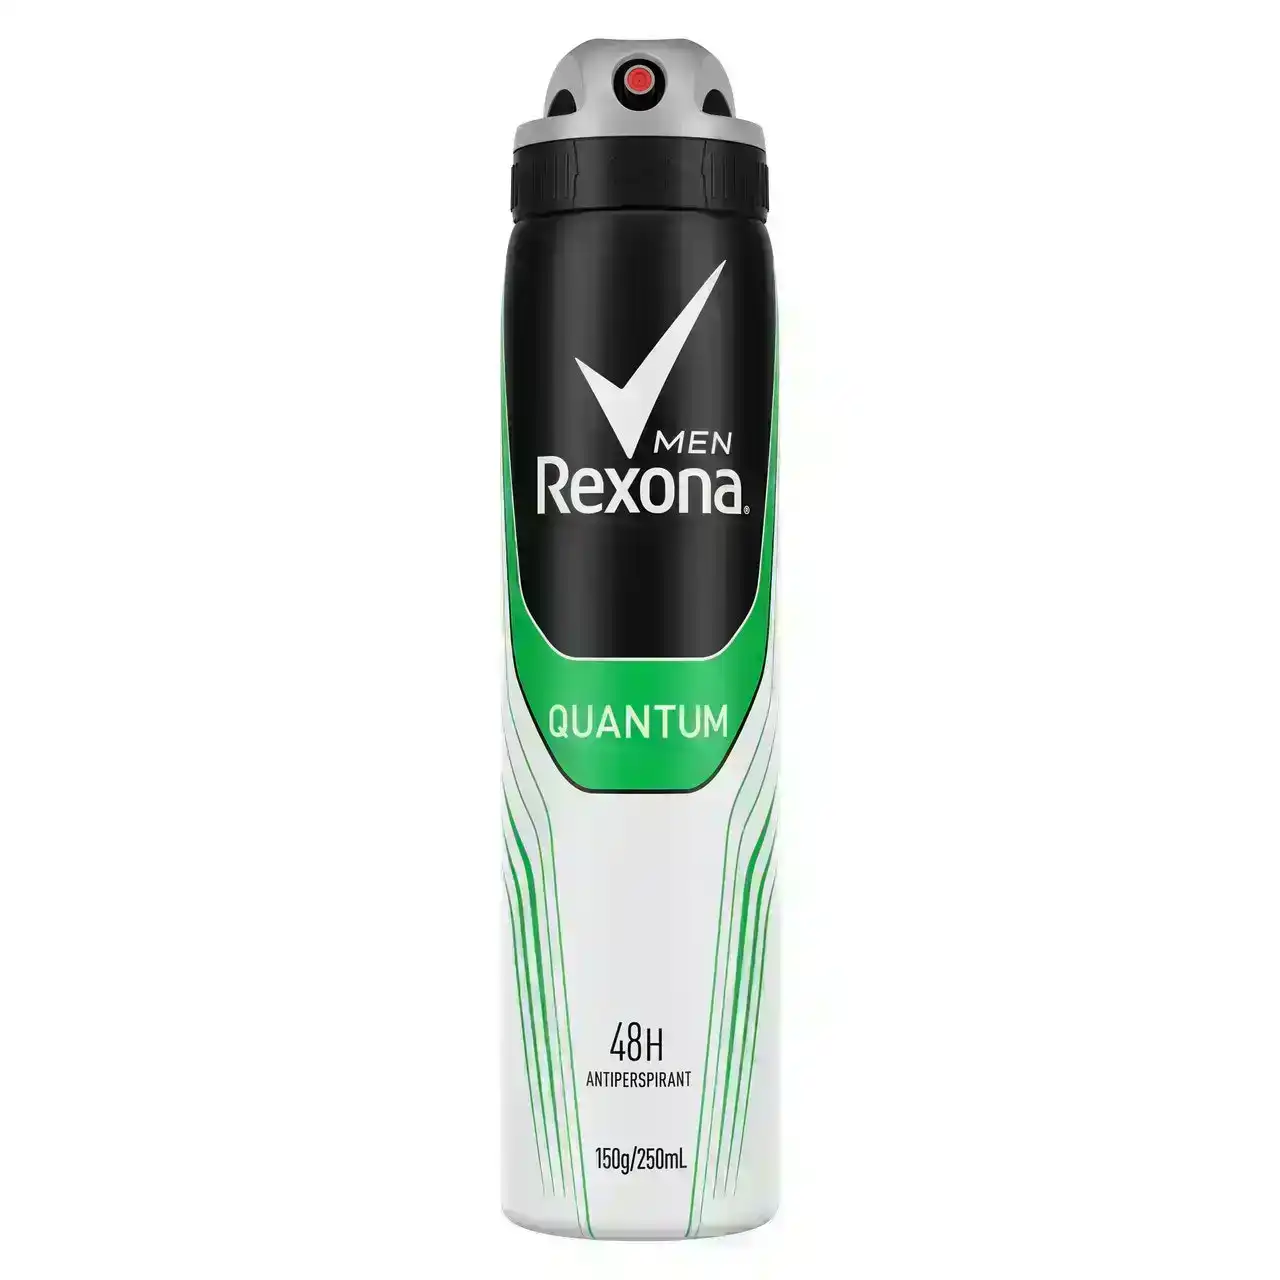 Rexona Men Antiperspirant Aerosol Deodorant Quantum with Antibacterial Protection 250mL 1